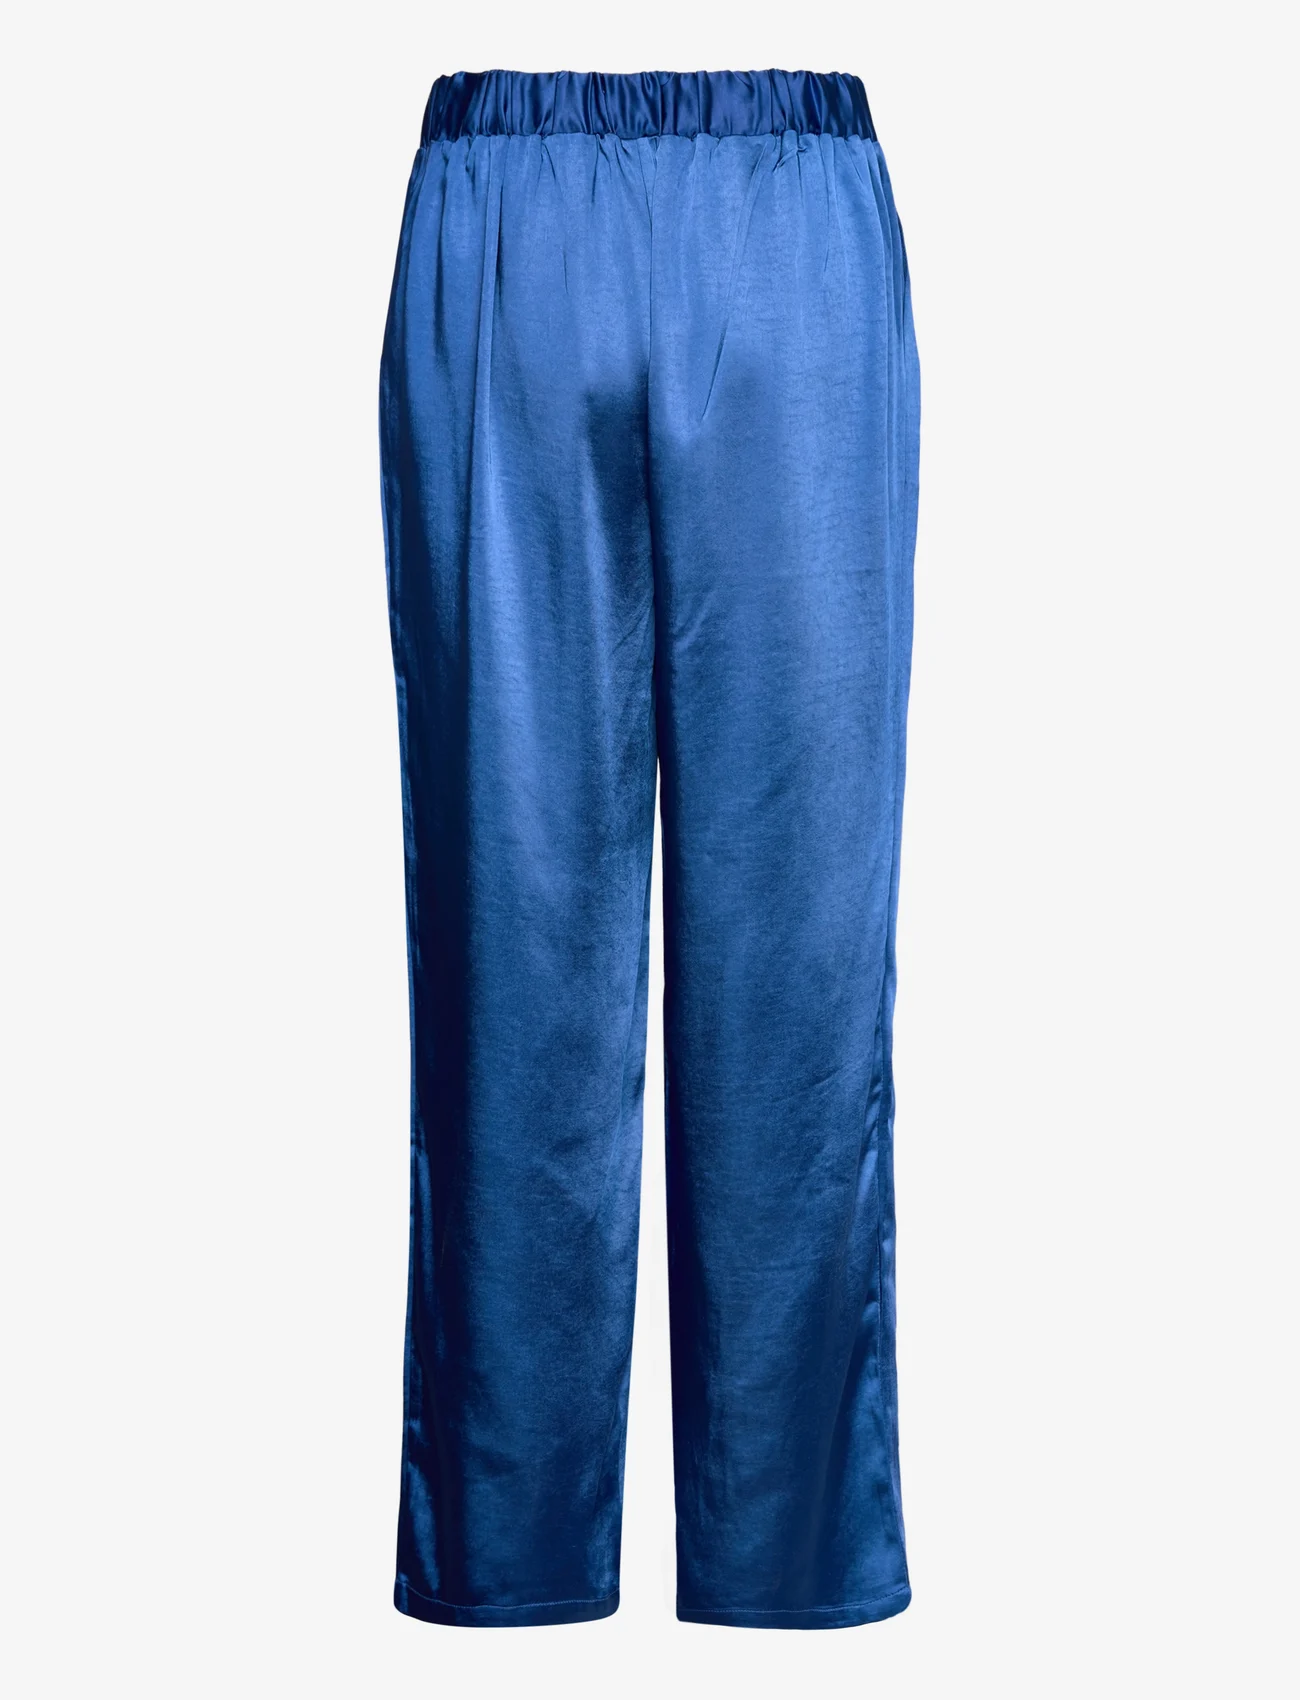 Lollys Laundry - Henry Pants - hosen mit weitem bein - neon blue - 1